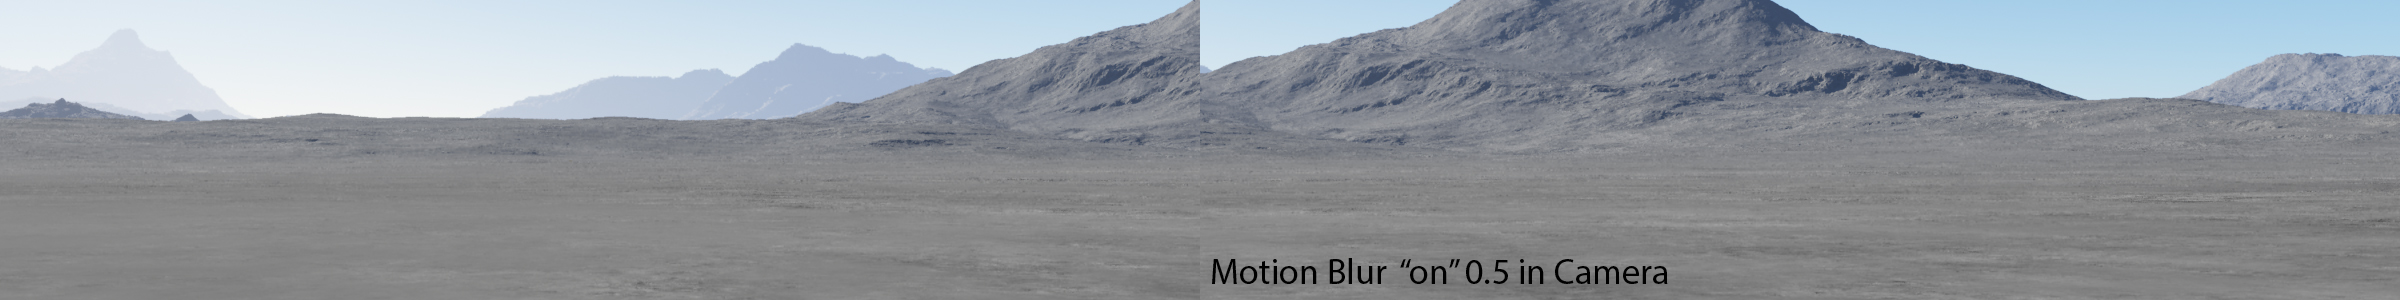 Motion Blur on.jpg